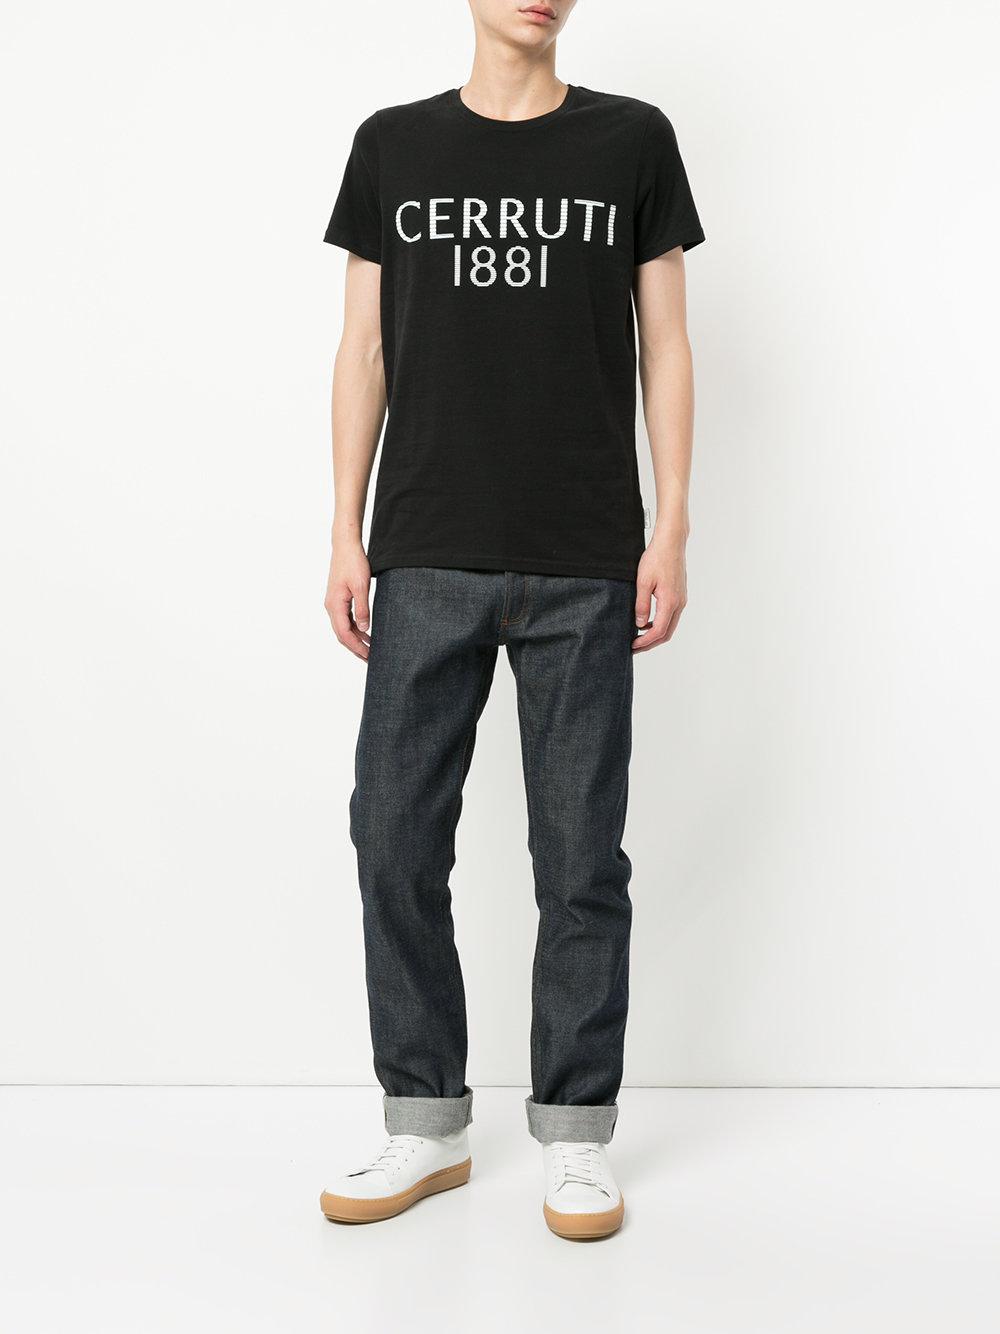 Cerruti 1881 Cotton Logo Print T-shirt in Black for Men | Lyst